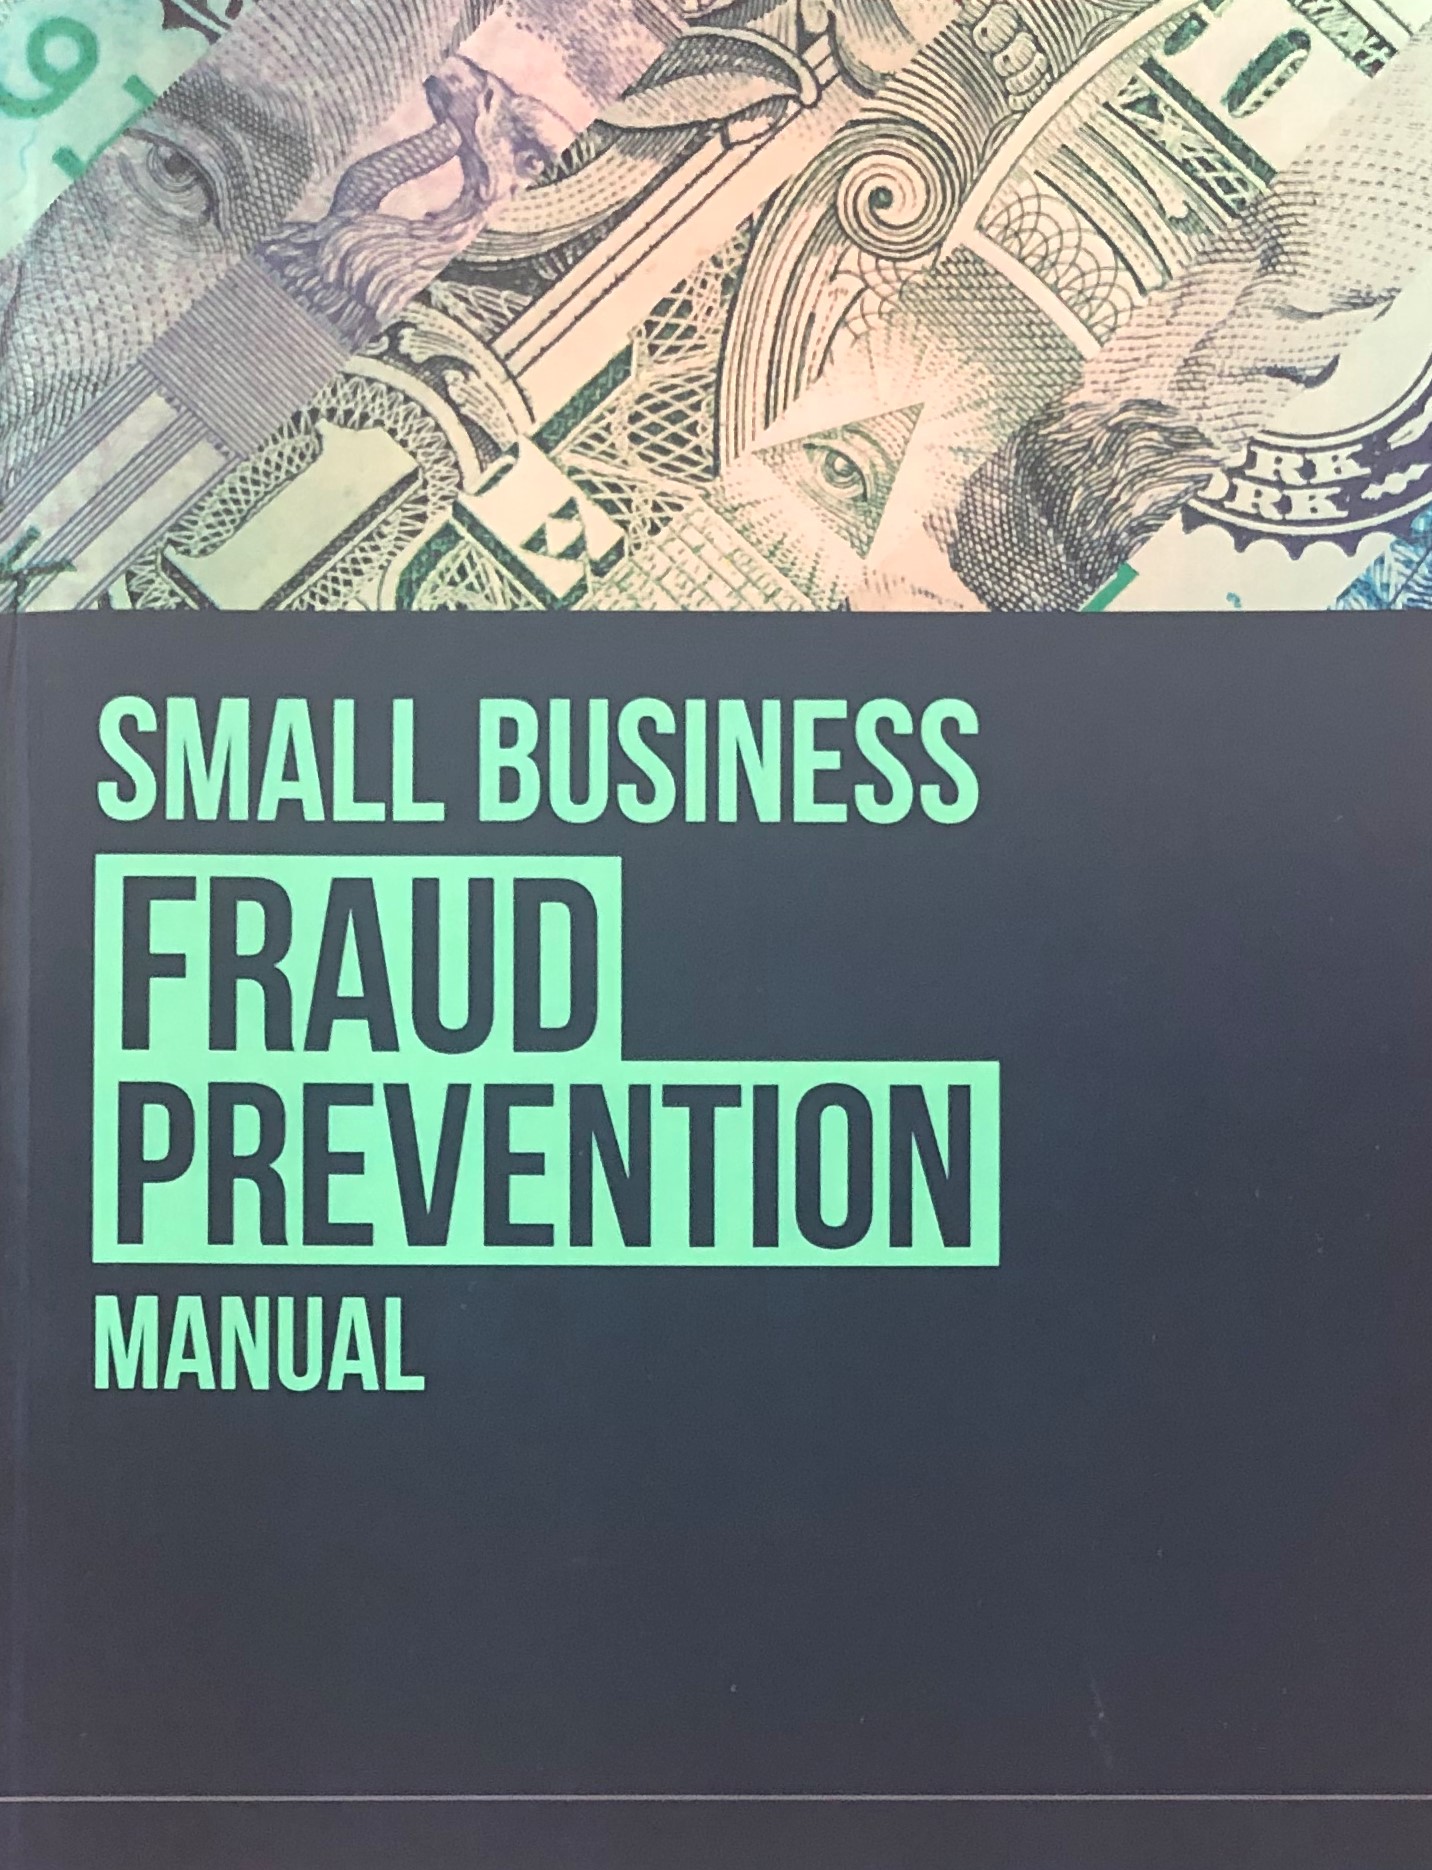 Description Small Business Fraud Prevention Manual